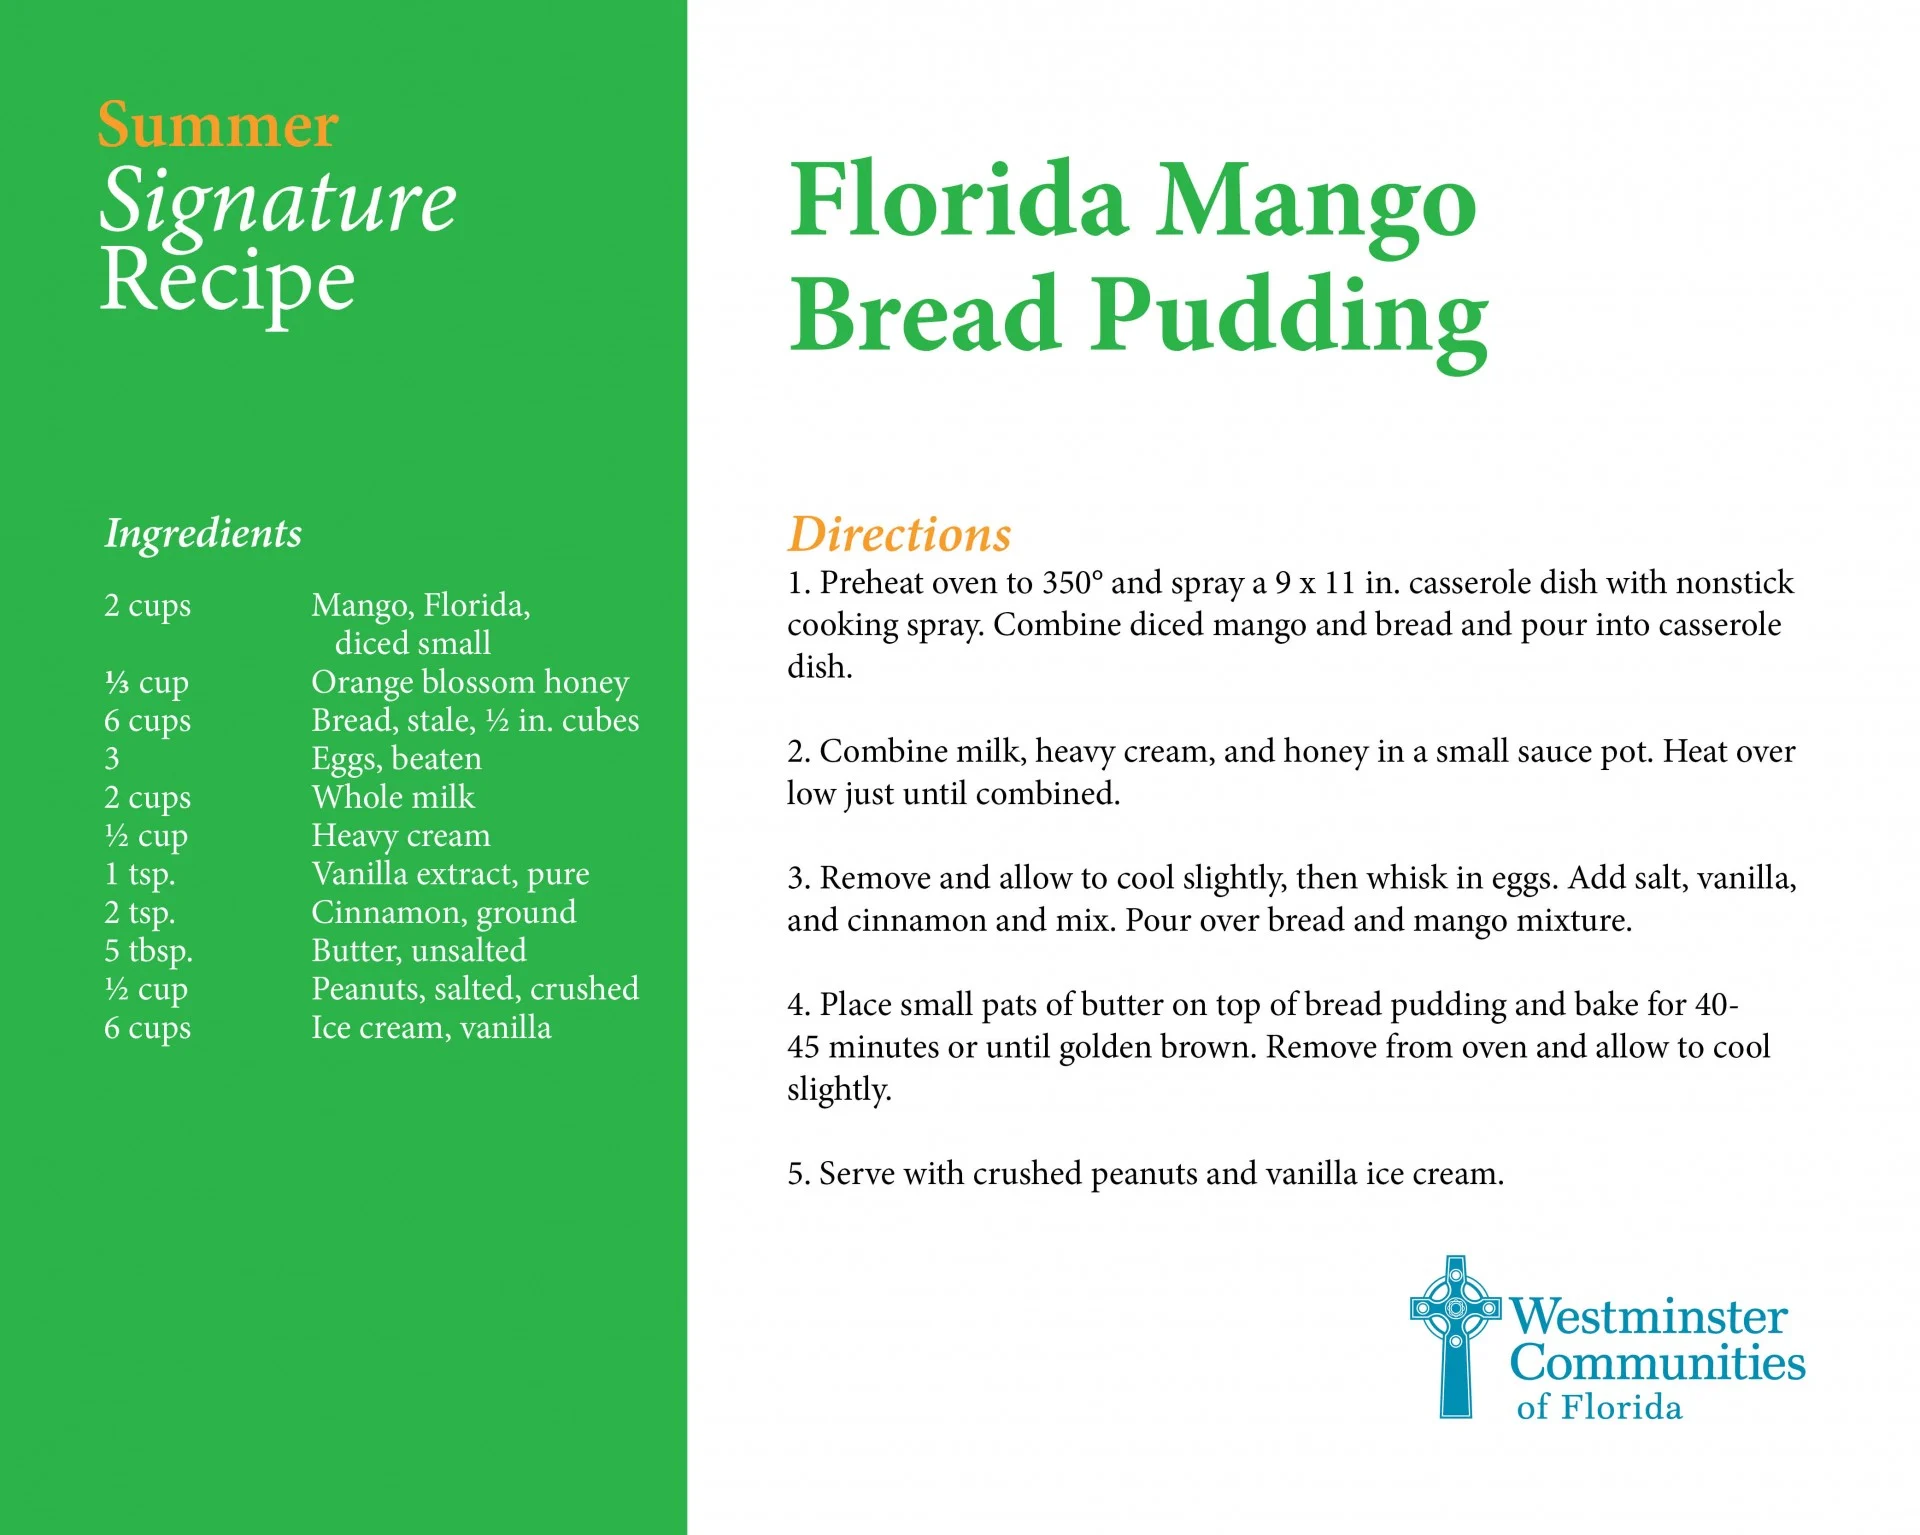 Our Signature Florida Mango Bread Pudding